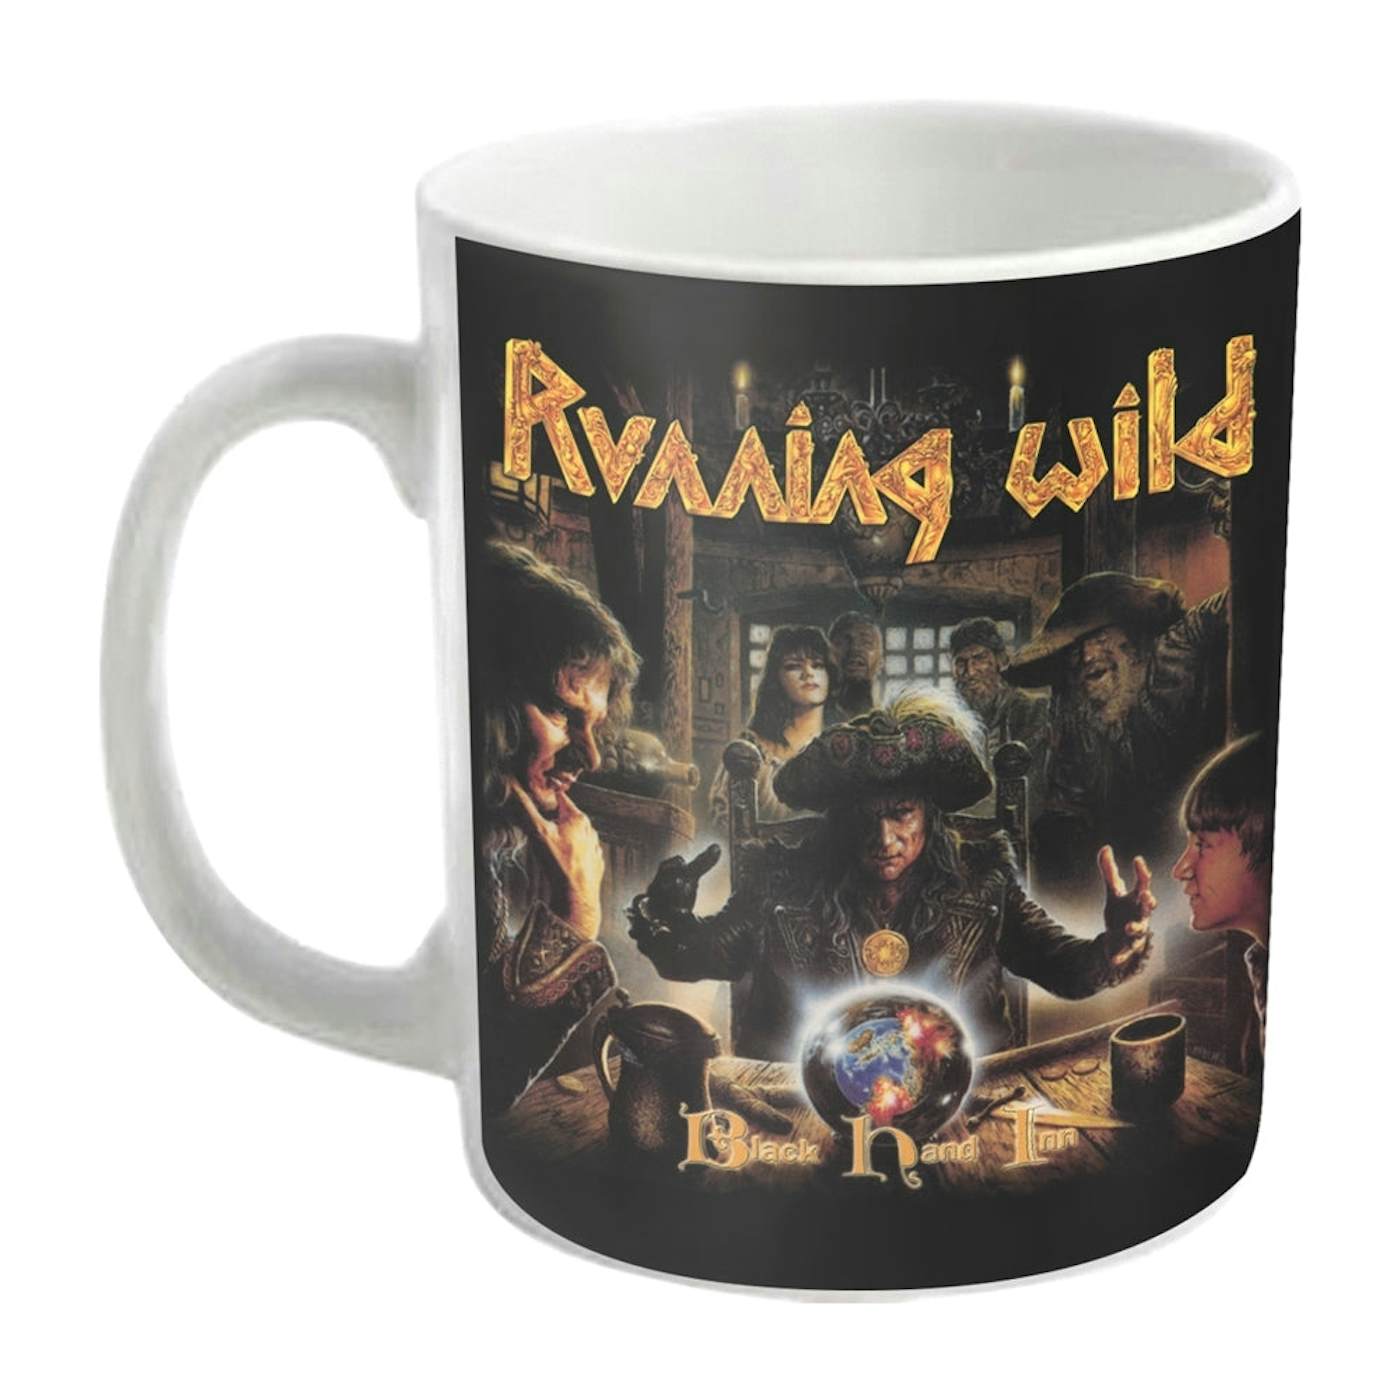 Running Wild Mug - Black Hand Inn